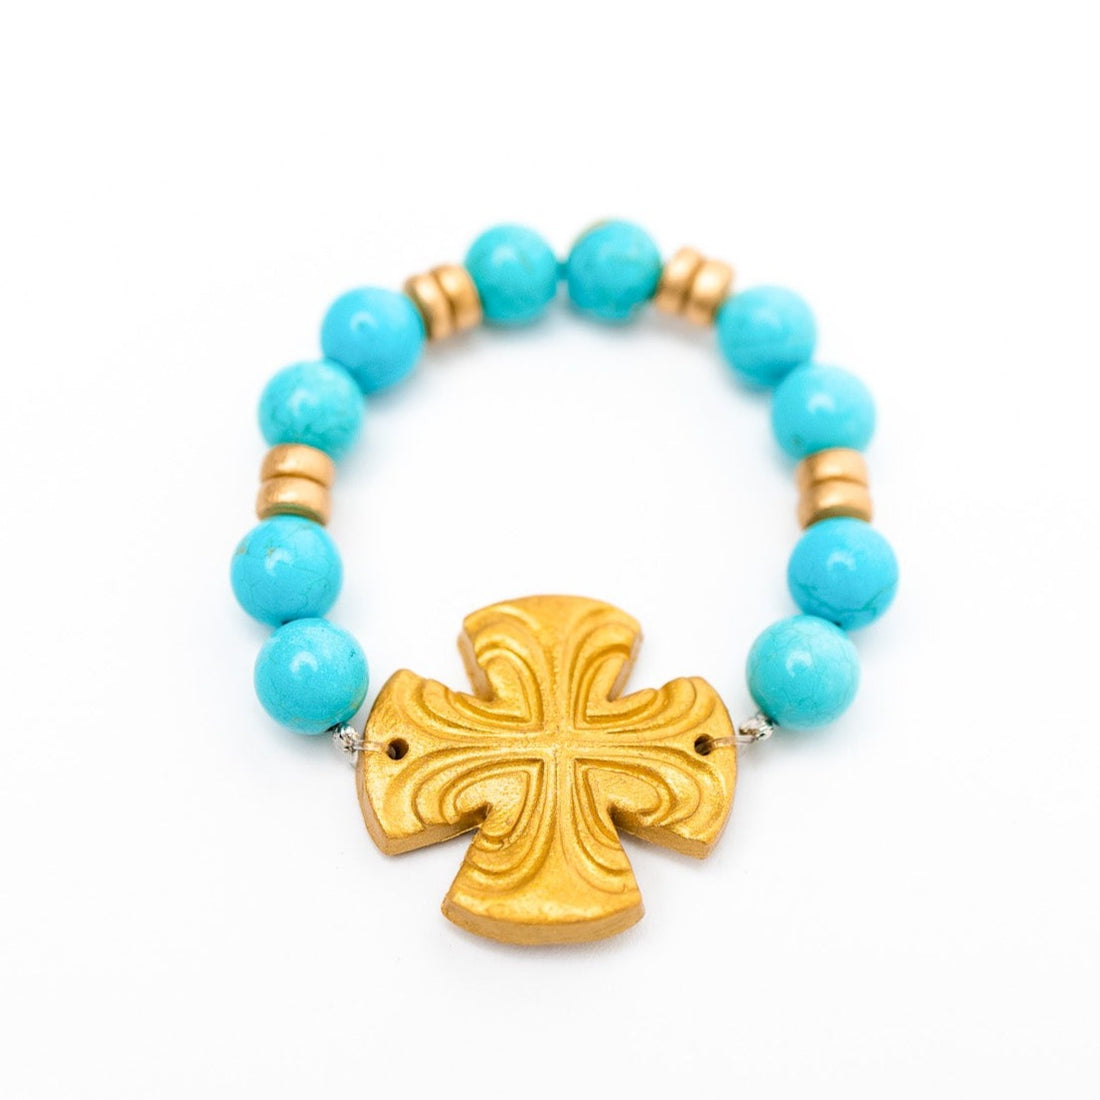 Turquoise Jade with Friendship Cross Bracelet